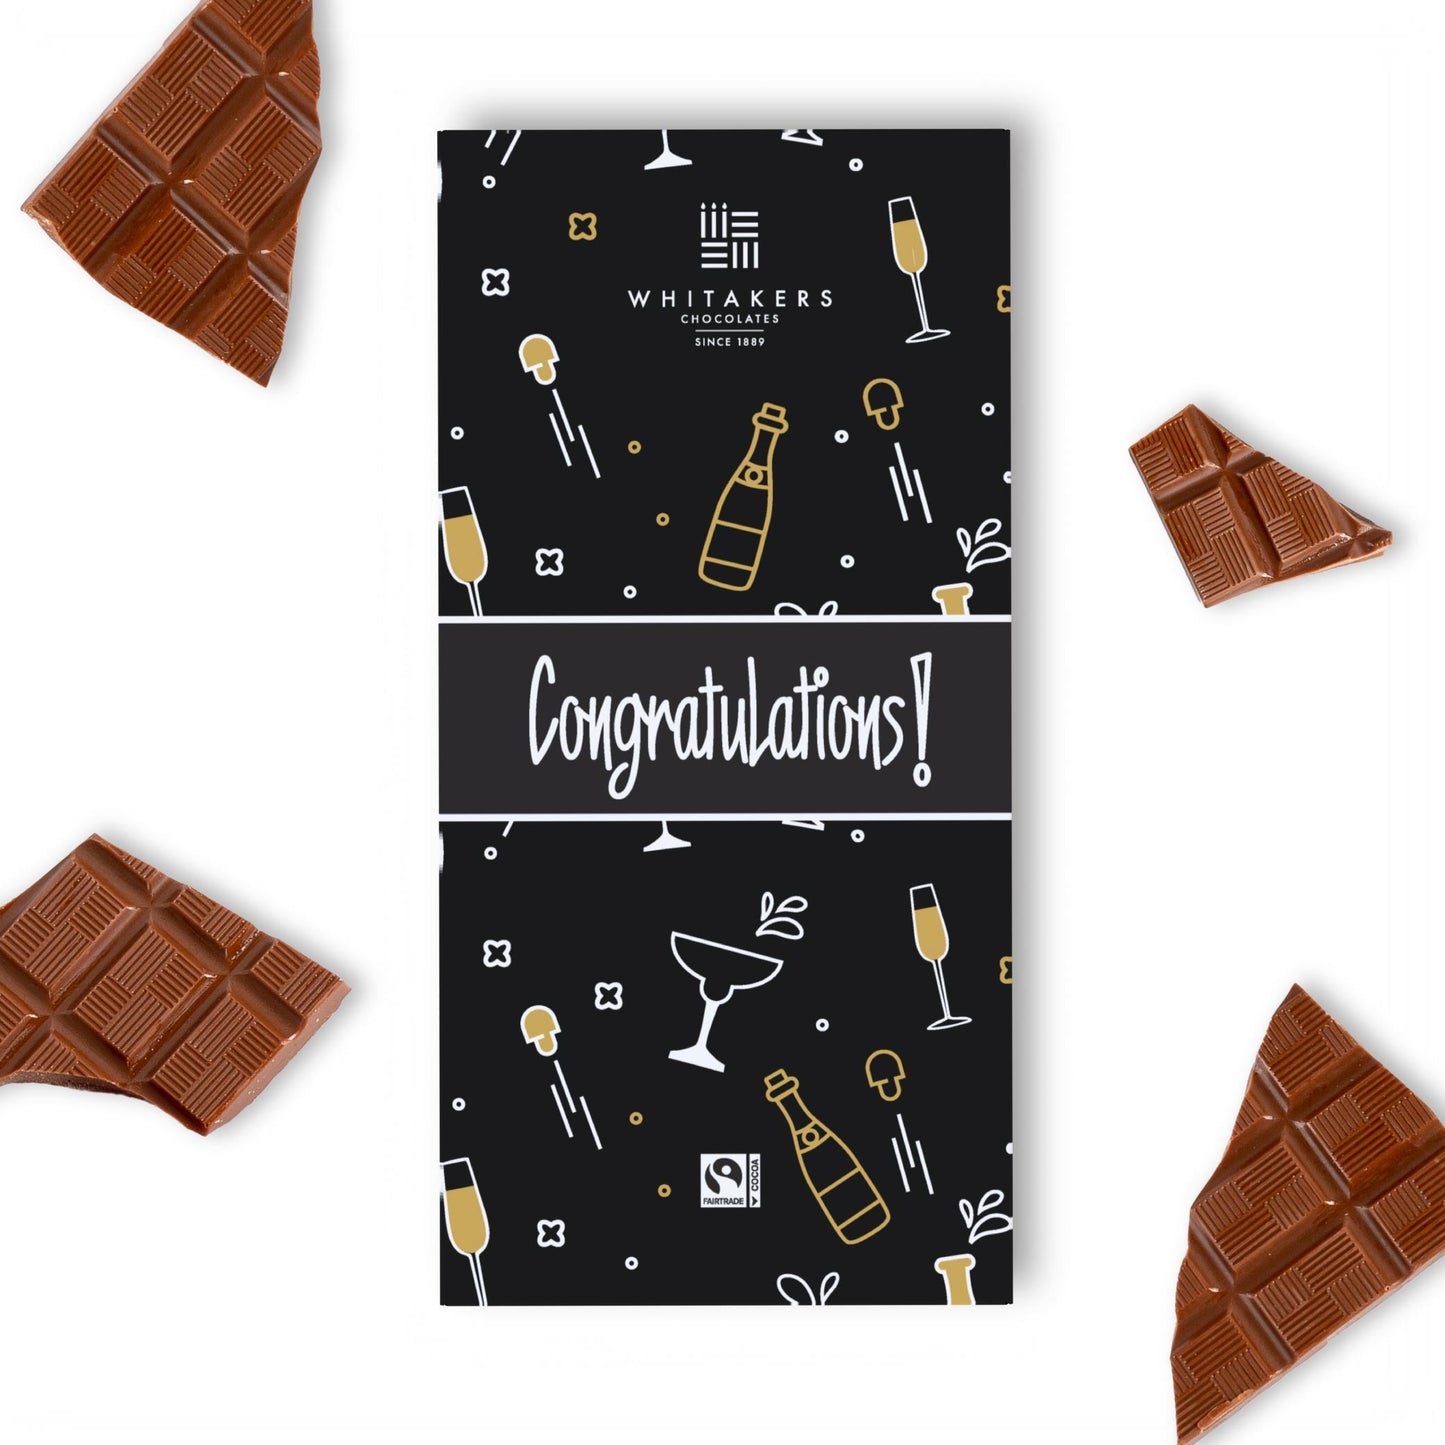 90g milk chocolate congratulations bar